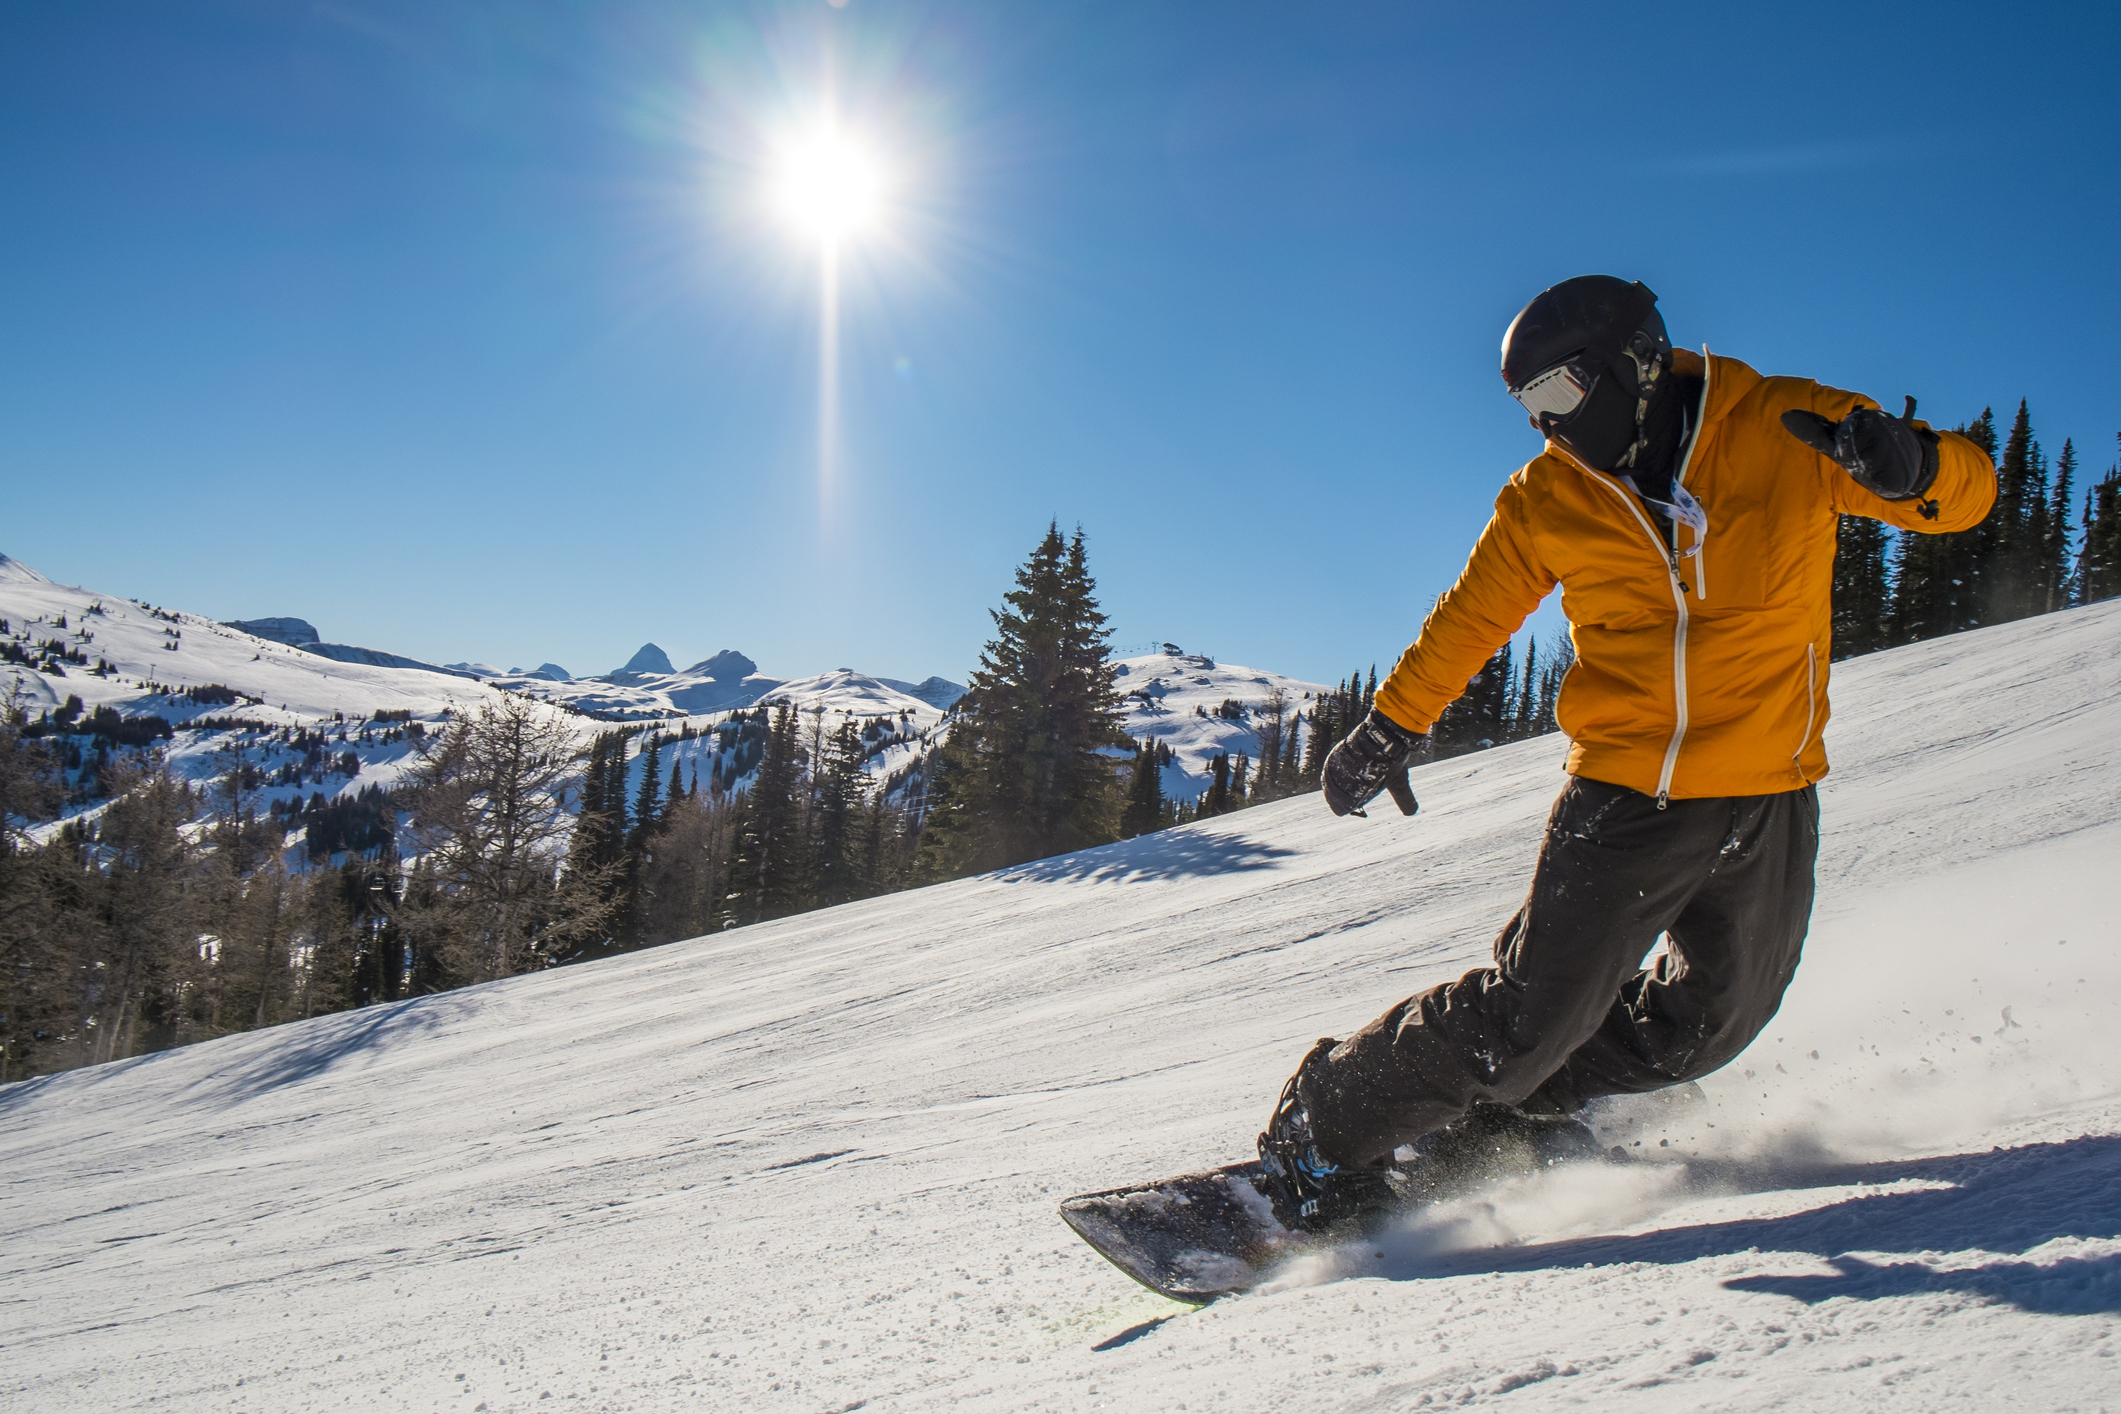 Snowboarder cranks turn on mountain slope